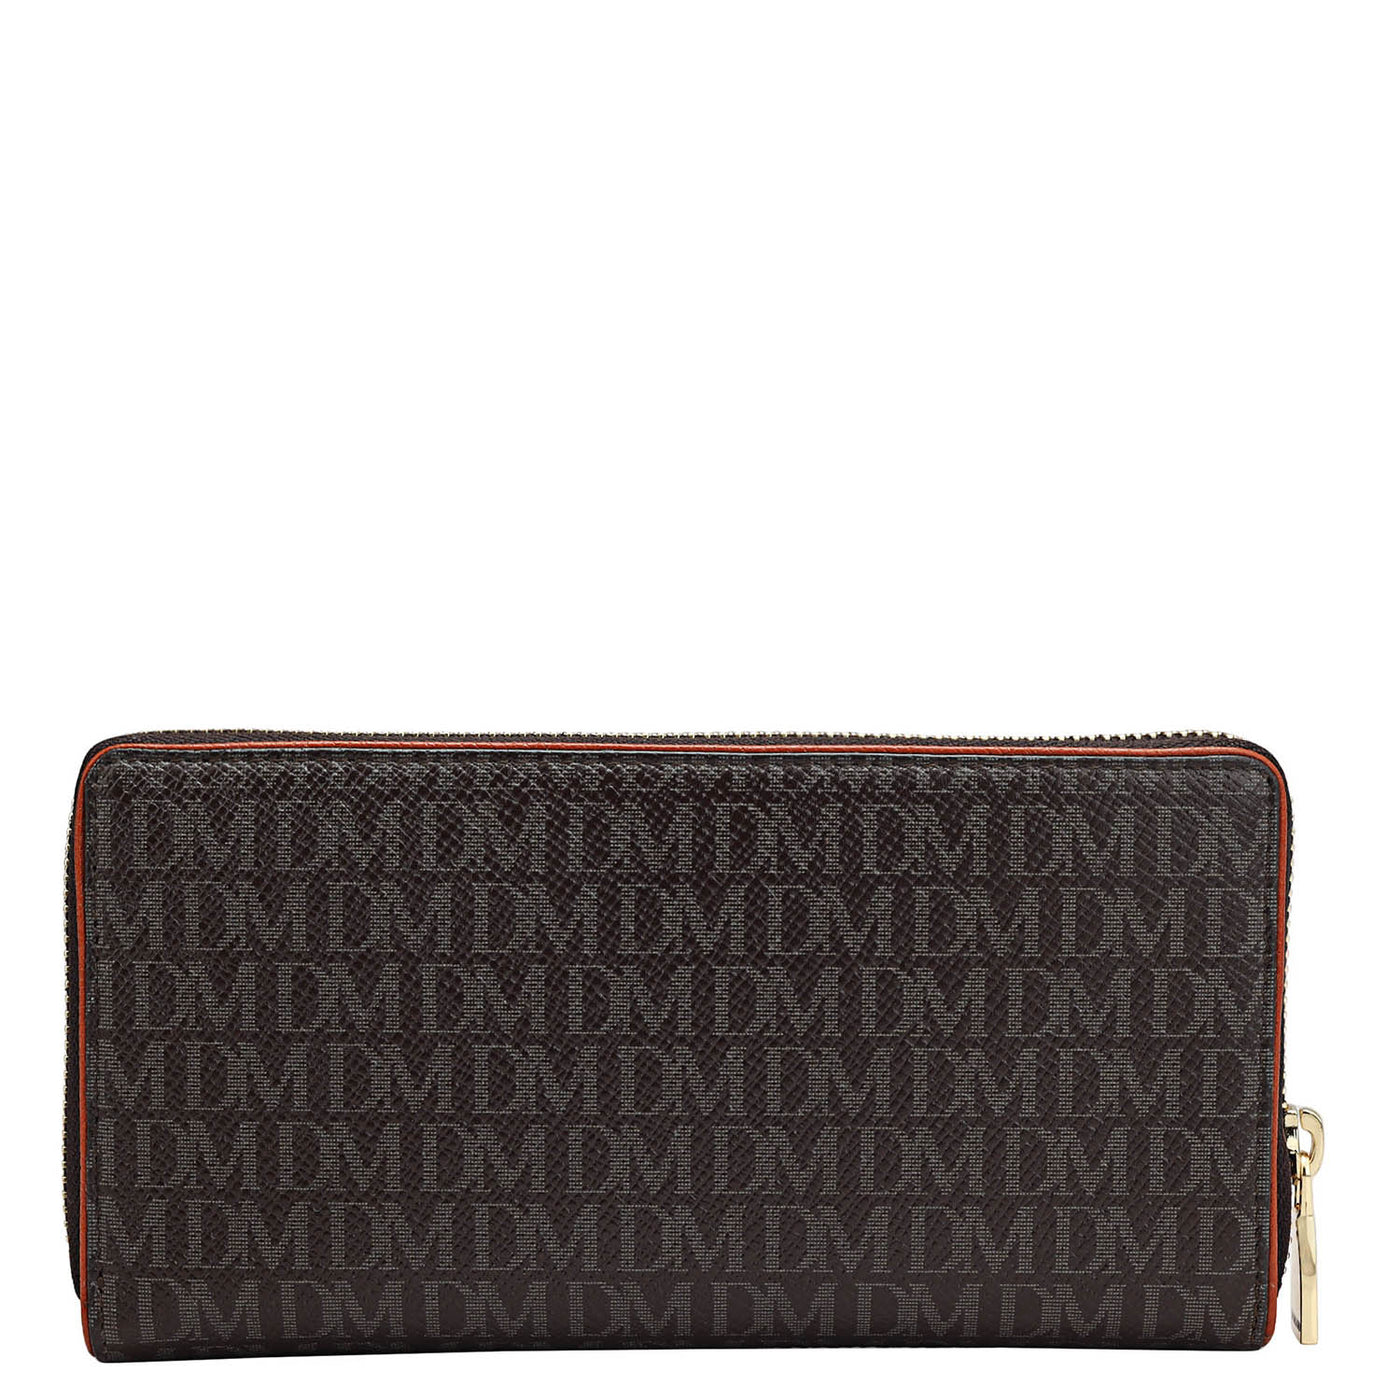 Monogram Franzy Leather Ladies Wallet - Chocolate